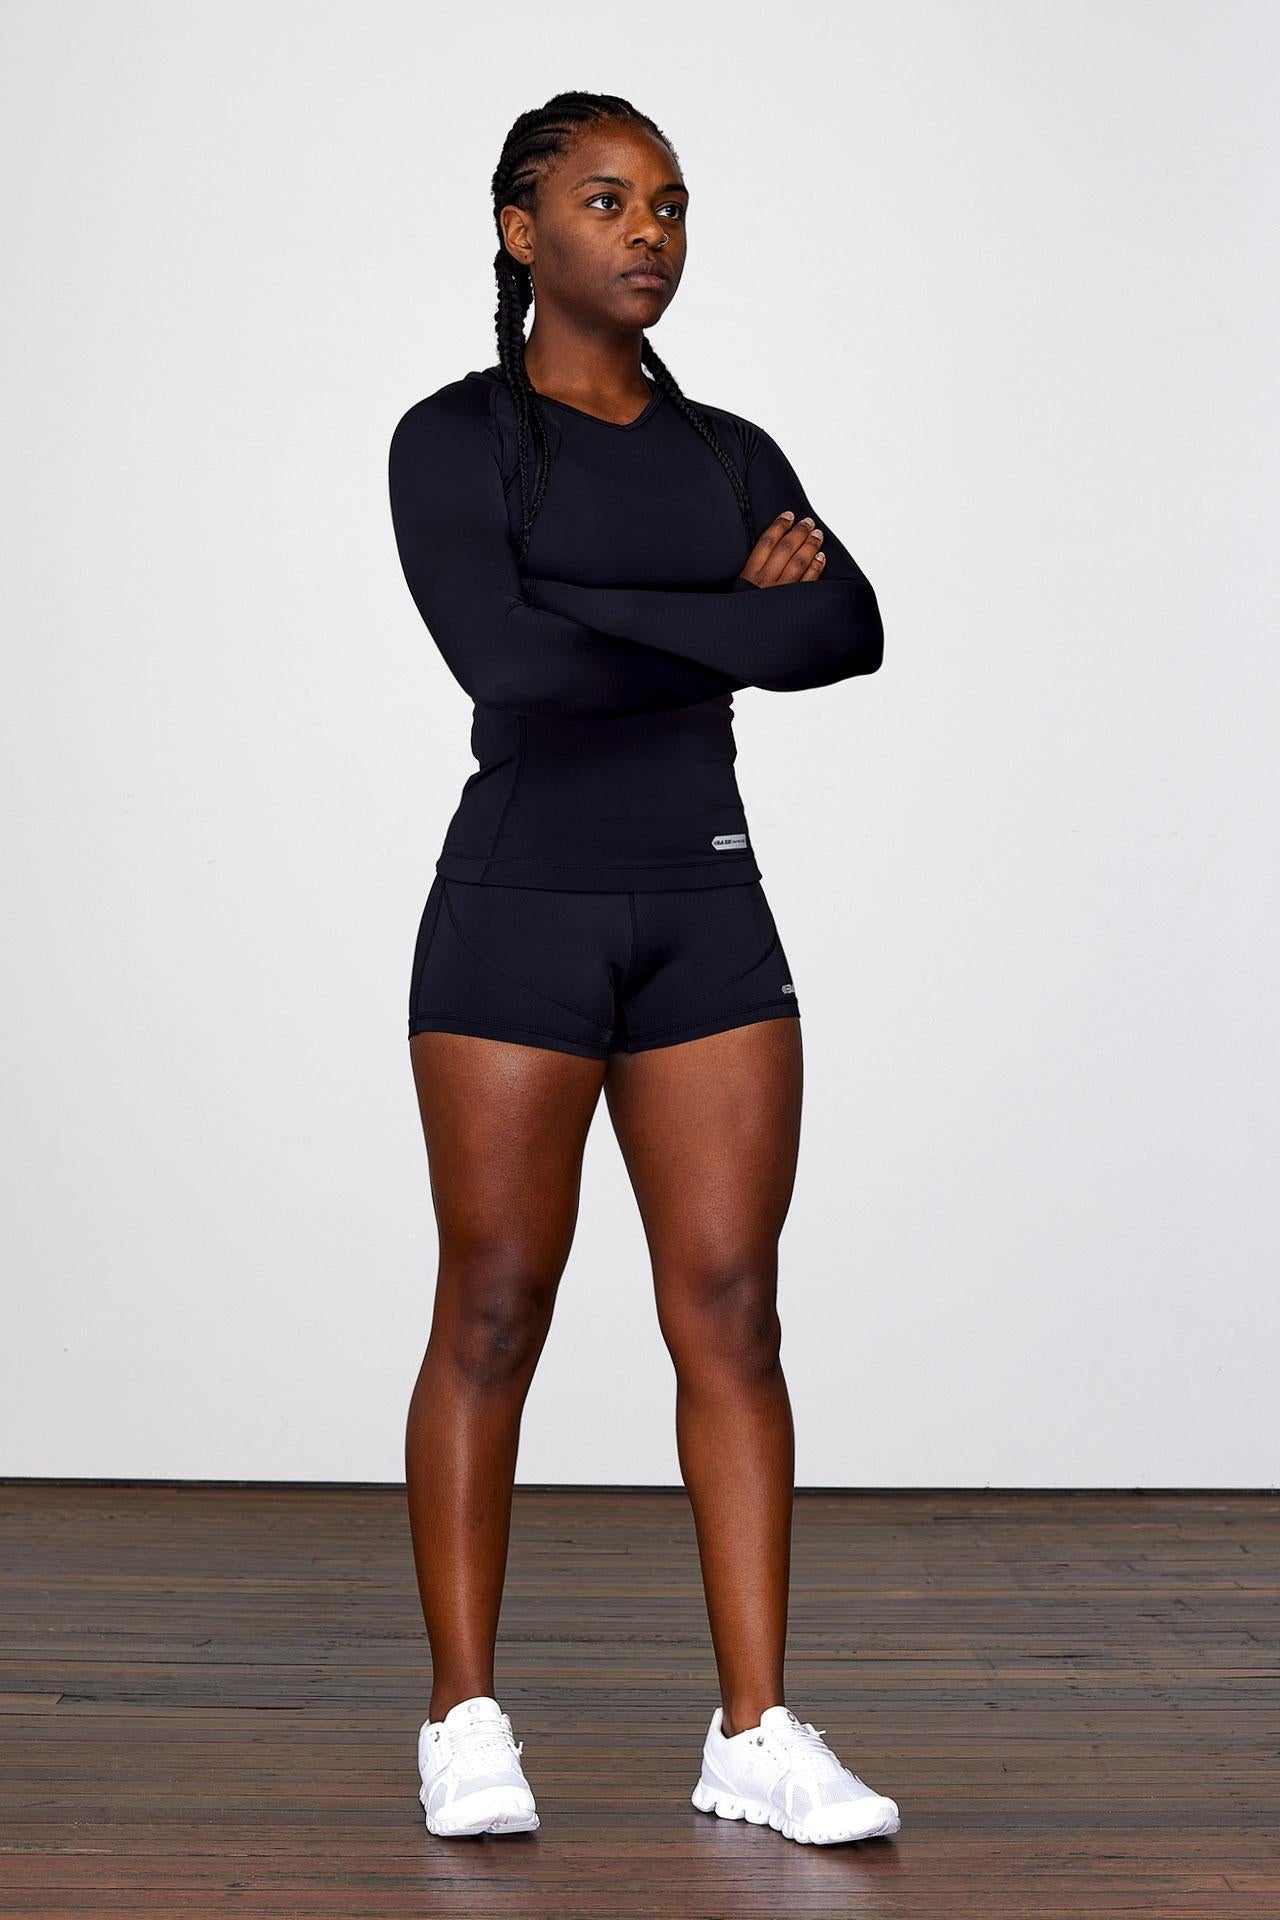 BASE Women's Long Sleeve Compression Tee - Black - Adelaide 36ers